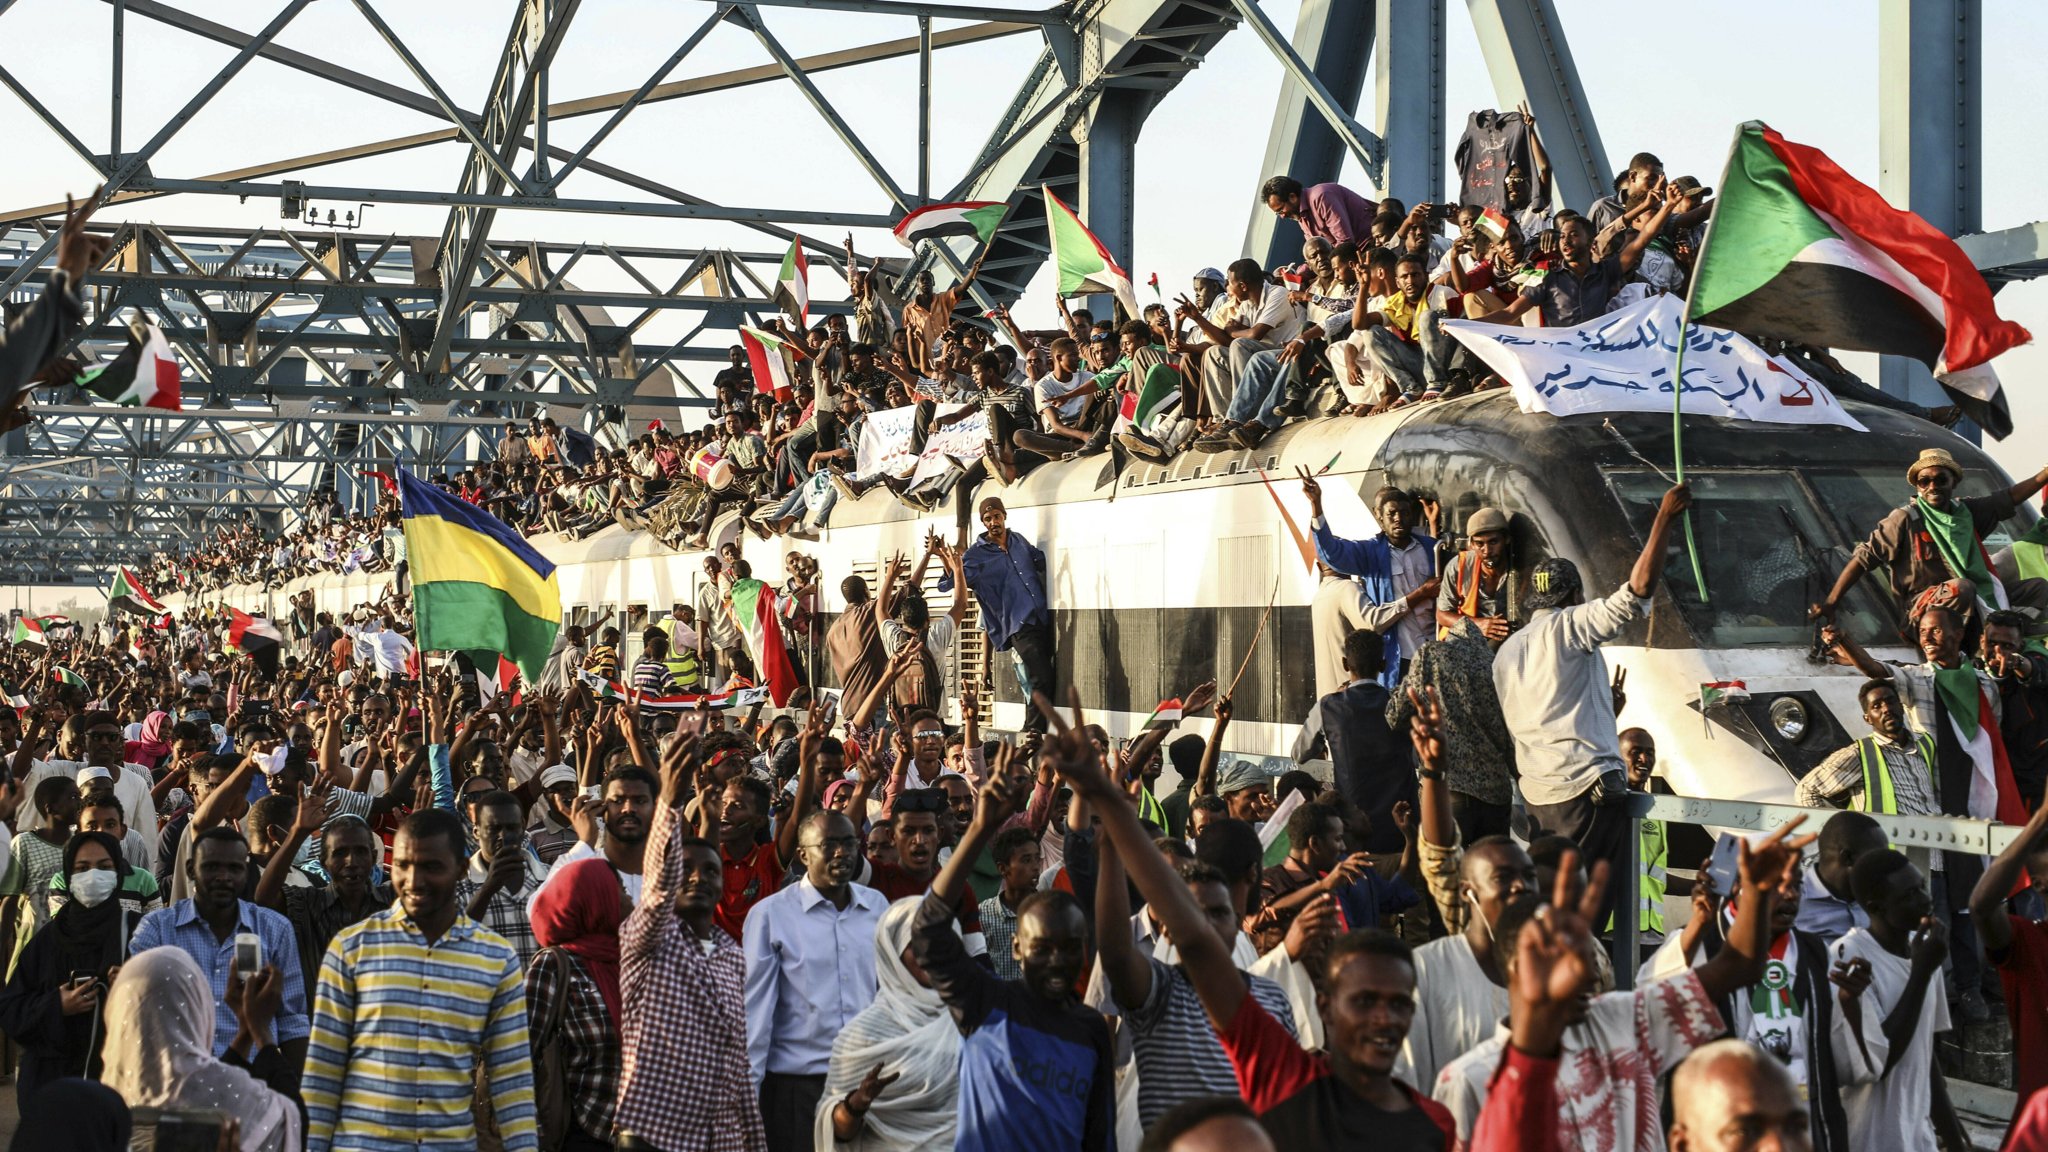 The "revolution train" enters the city of Khartoum, Sudan, April 2019.